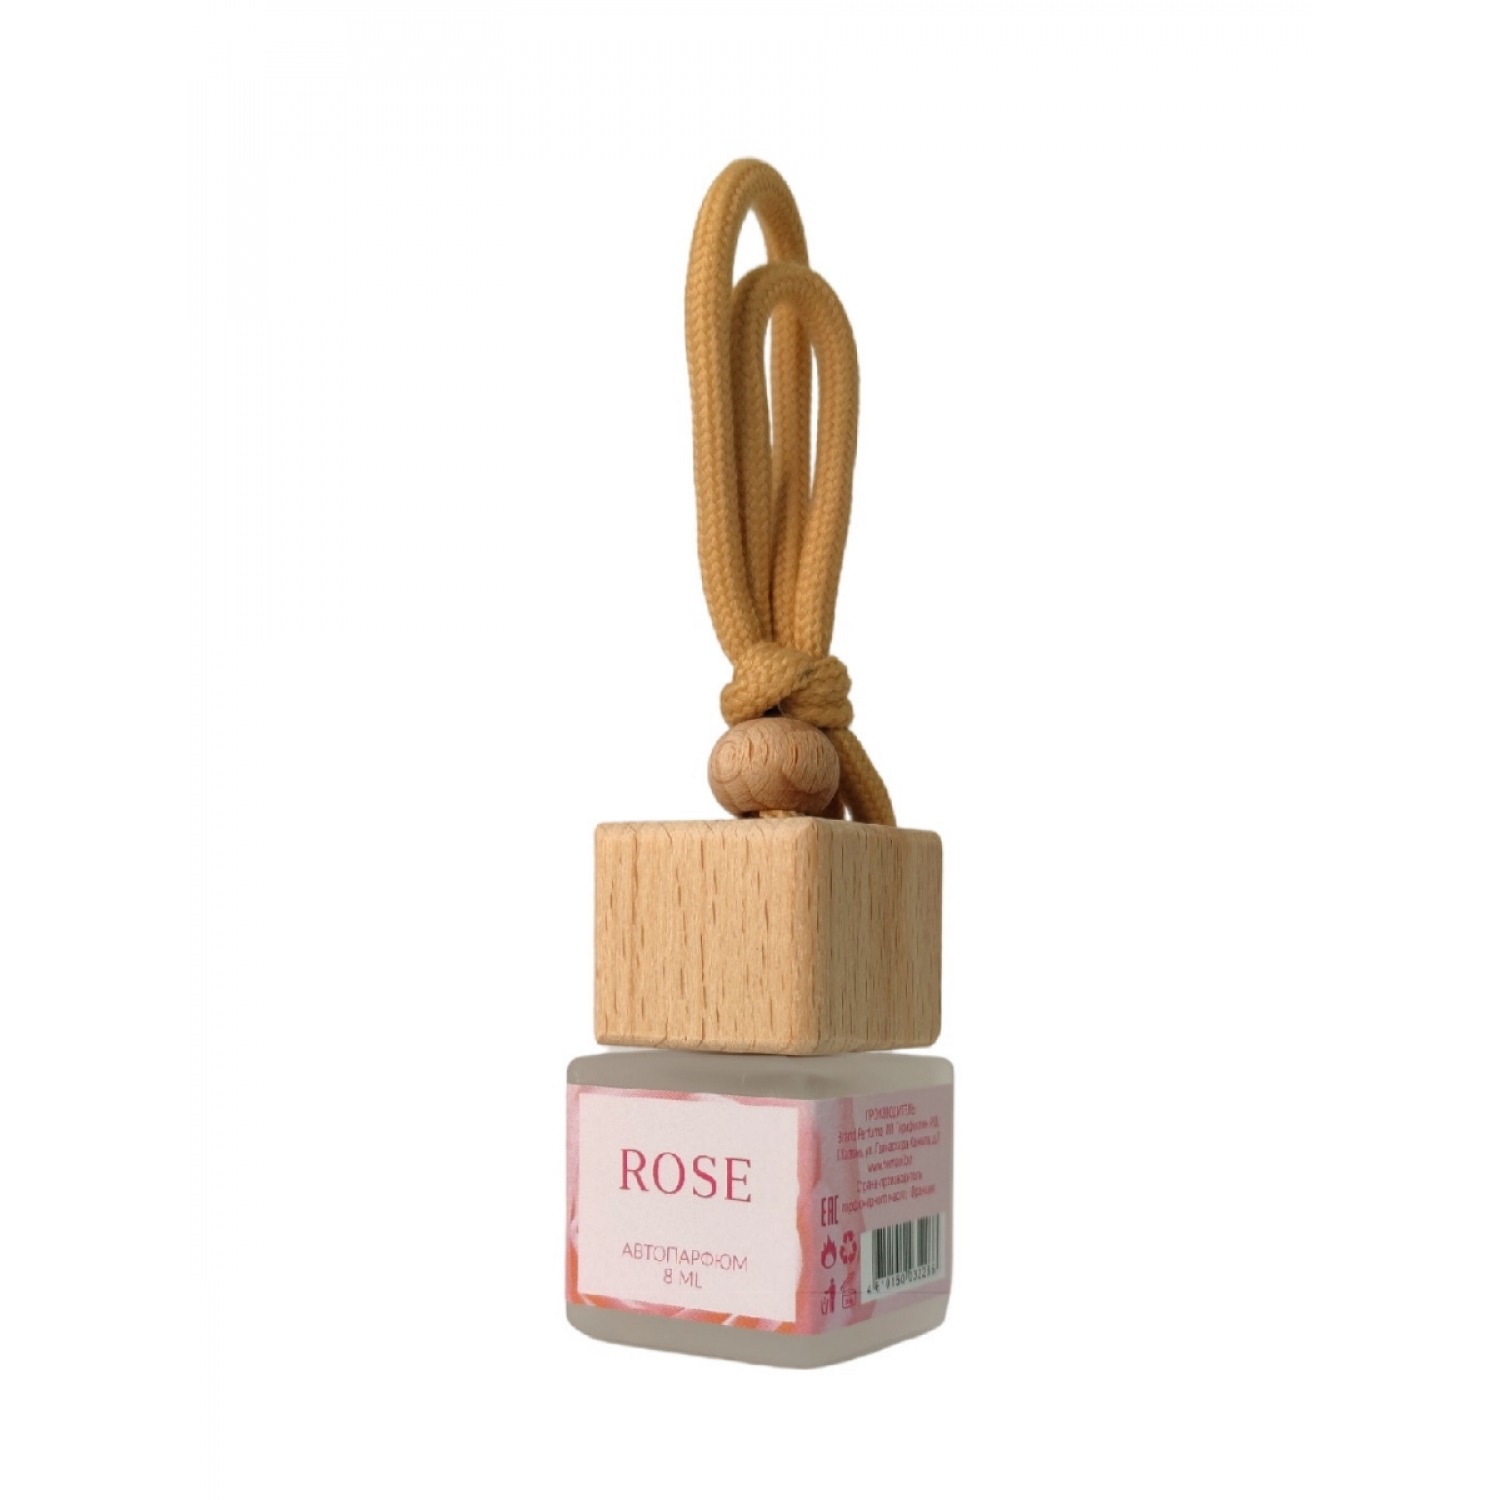 Автопарфюм ROSE, Brand Perfume, 8 мл.